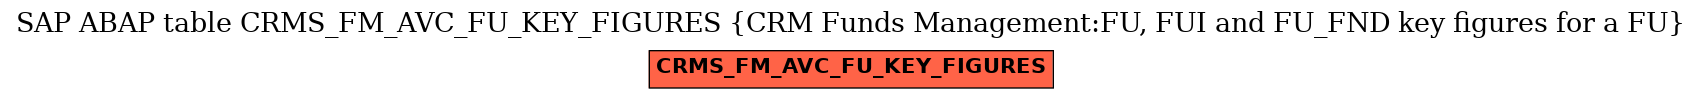 E-R Diagram for table CRMS_FM_AVC_FU_KEY_FIGURES (CRM Funds Management:FU, FUI and FU_FND key figures for a FU)